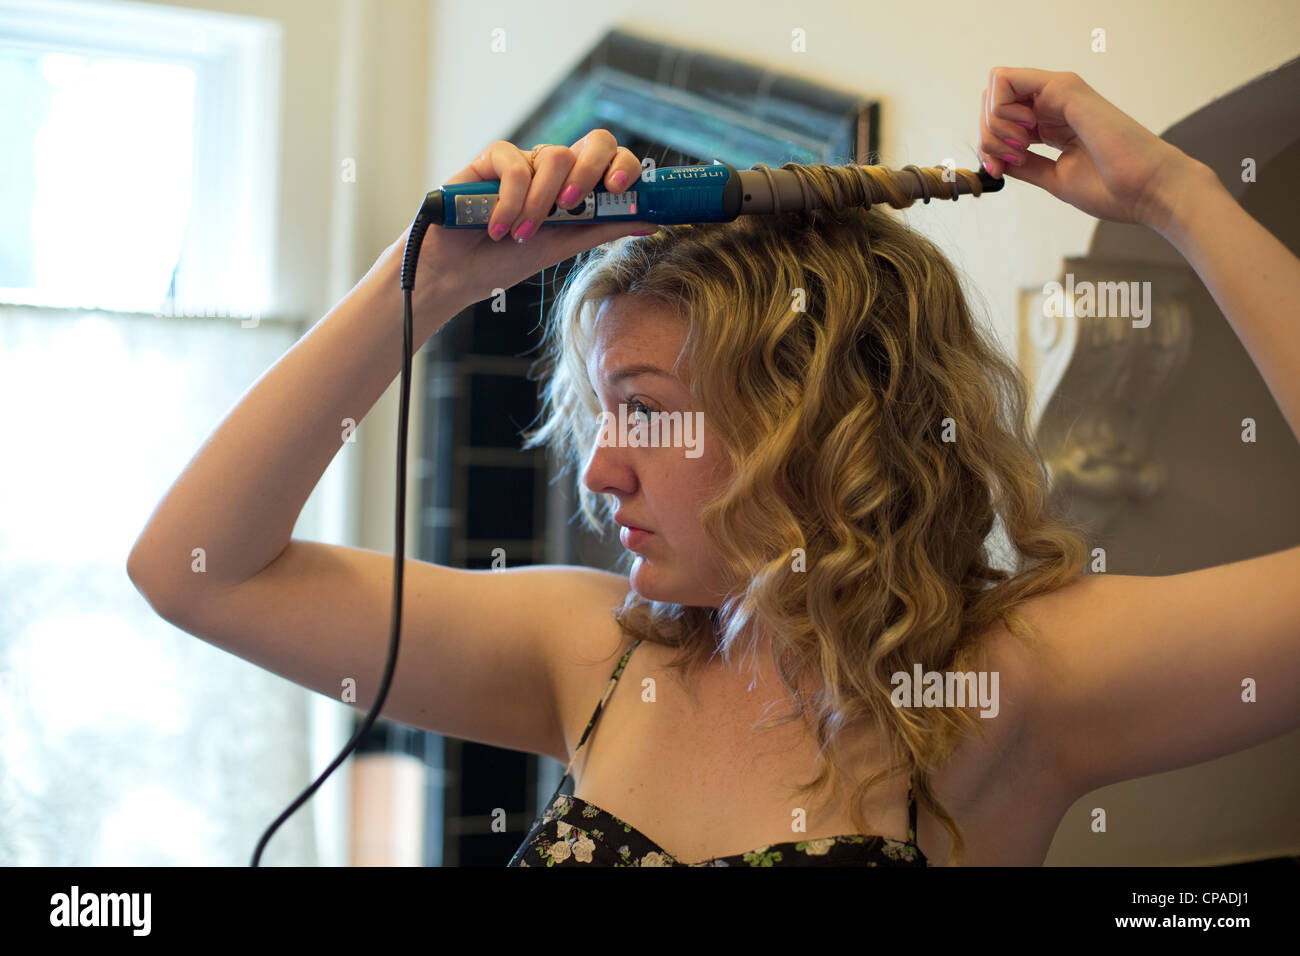 Mariel West, 24, utilizza un ferro arricciacapelli per arricciare i capelli  Foto stock - Alamy